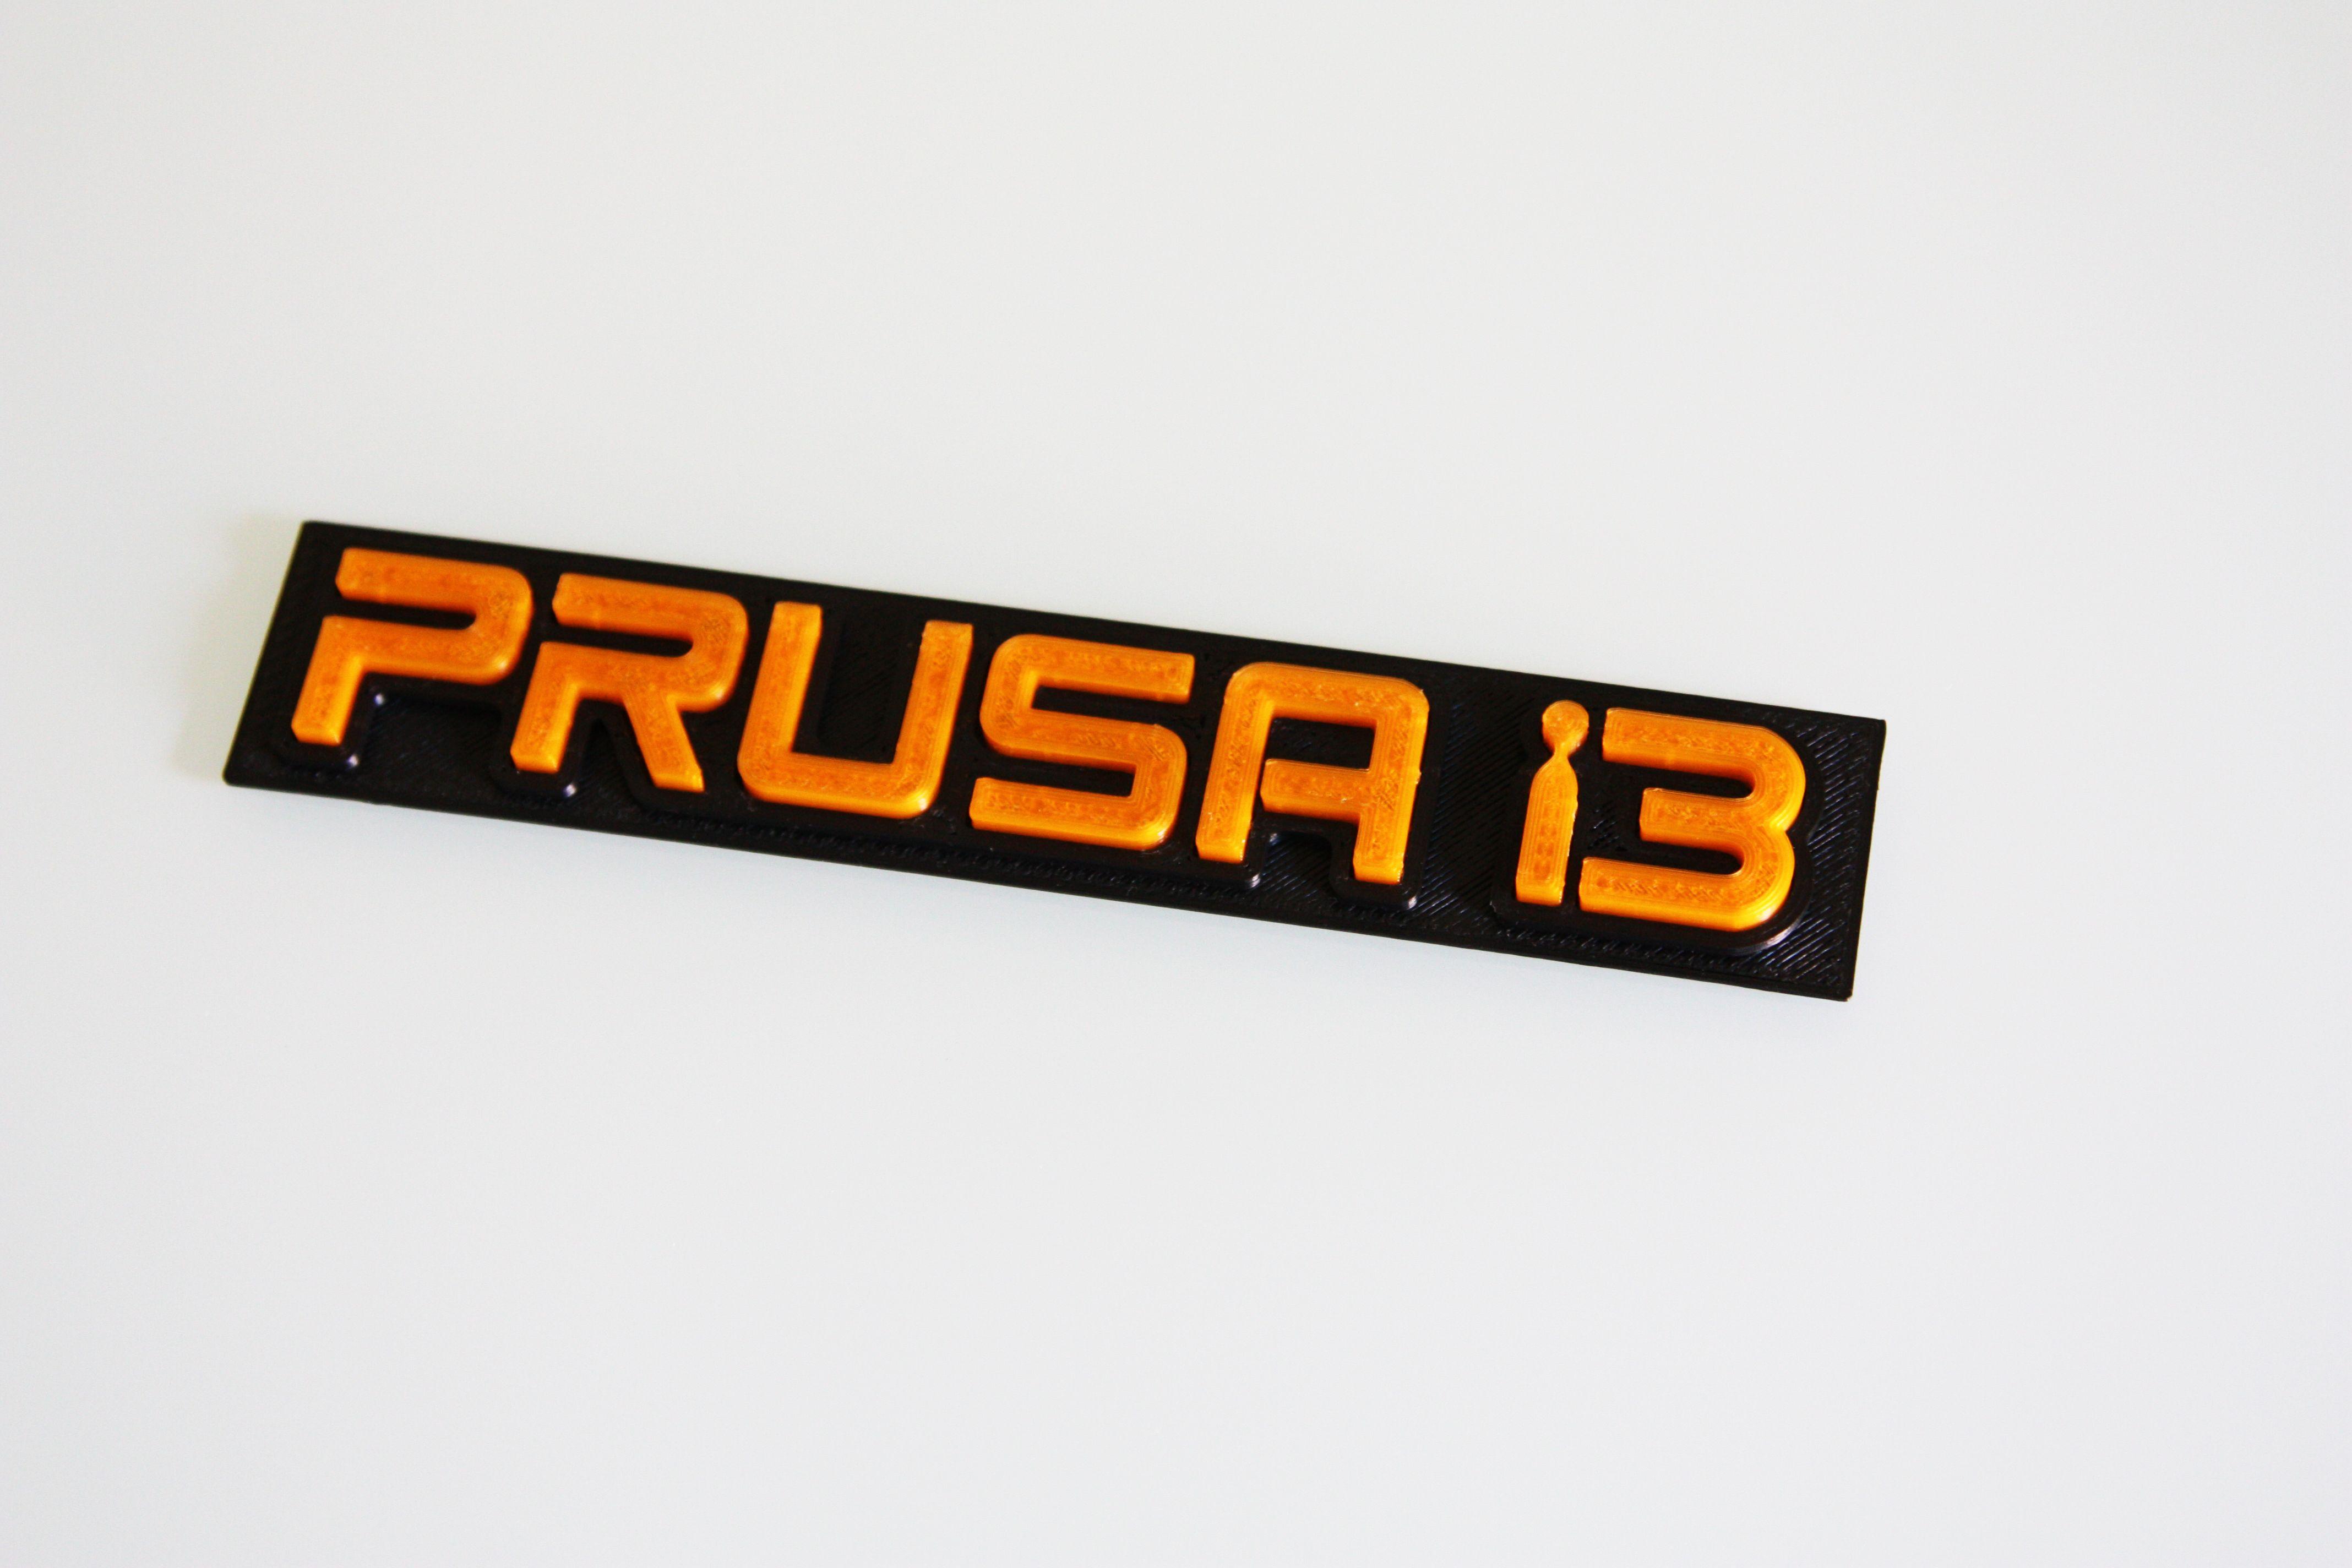 I3 Logo - Prusa i3 LOGO for PRUSA